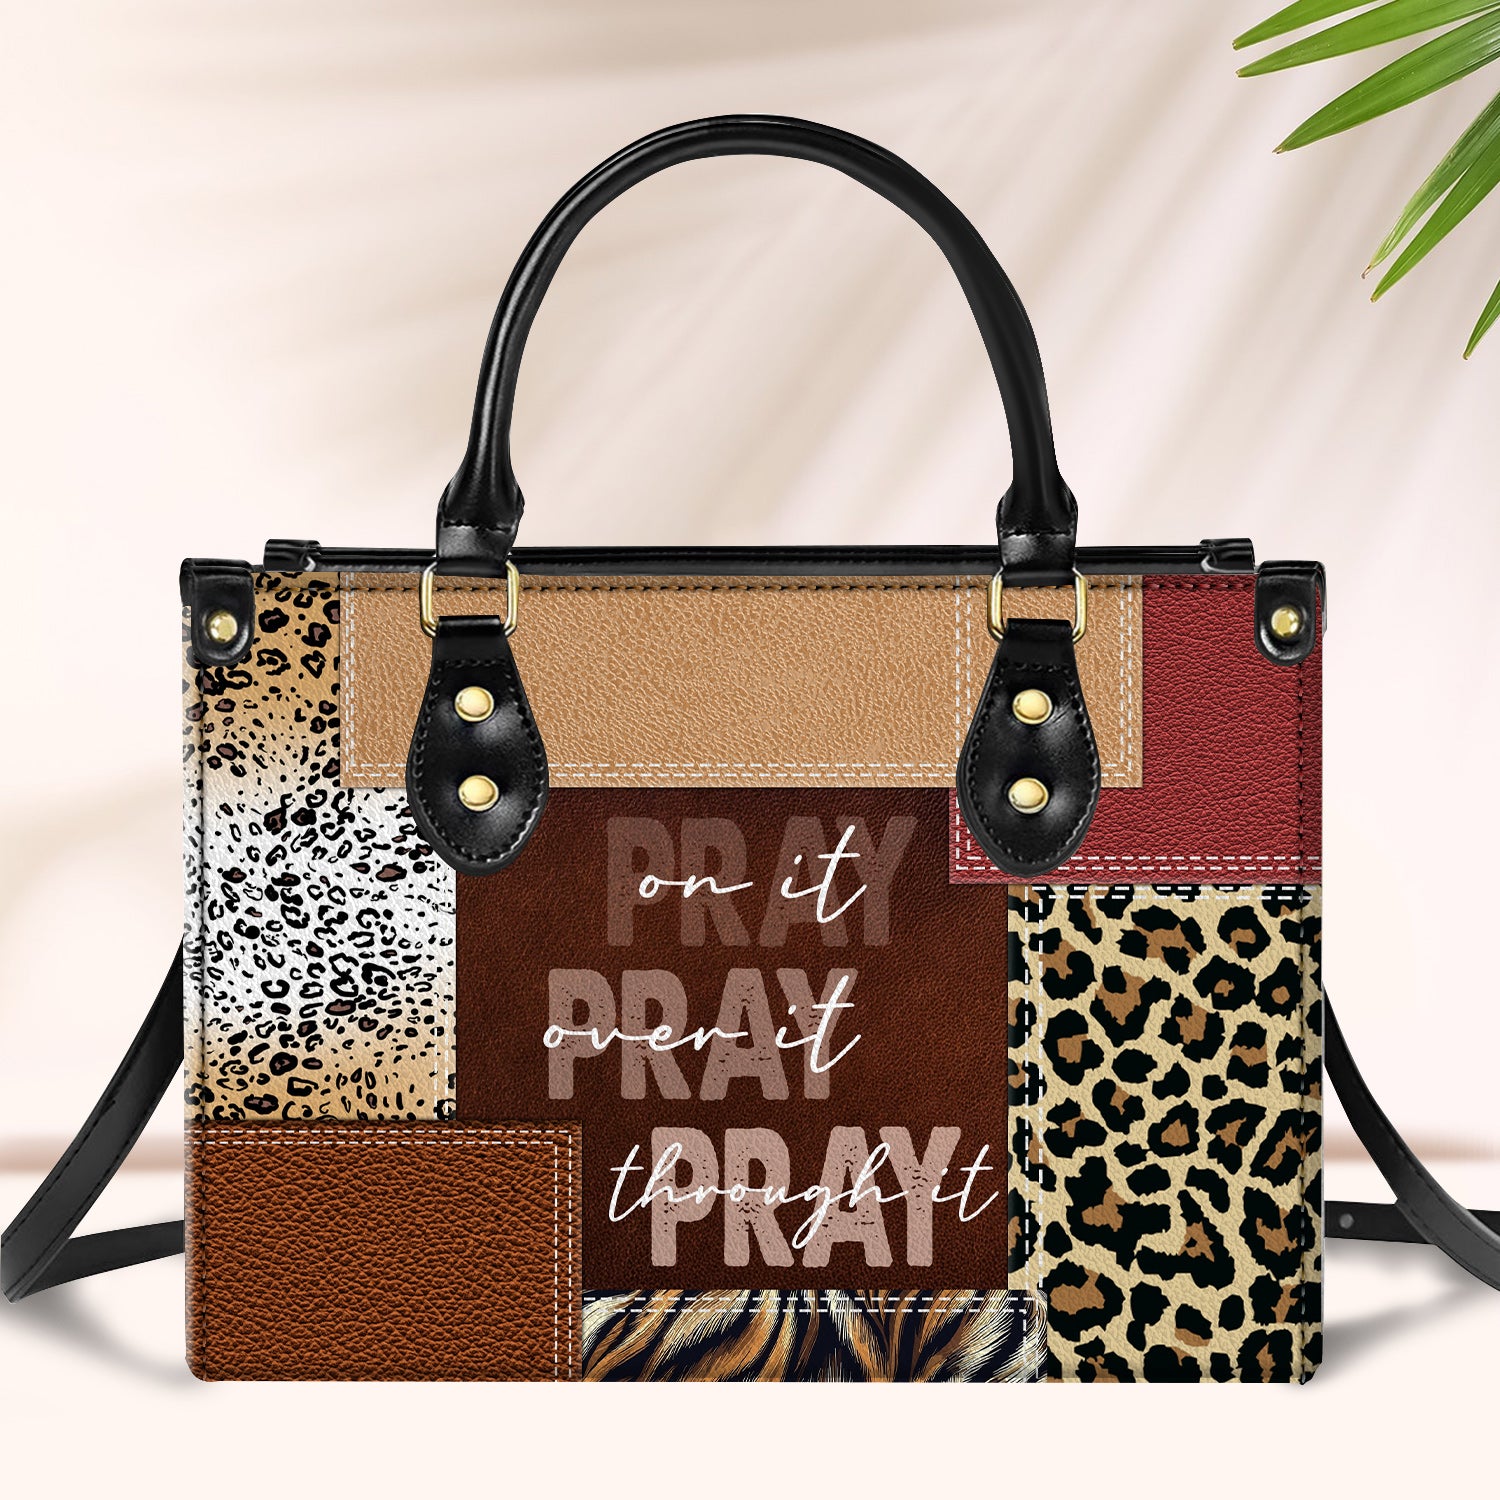 Pray On It Pray Over It Pray Through It, Faithful Gift Leather Handbag